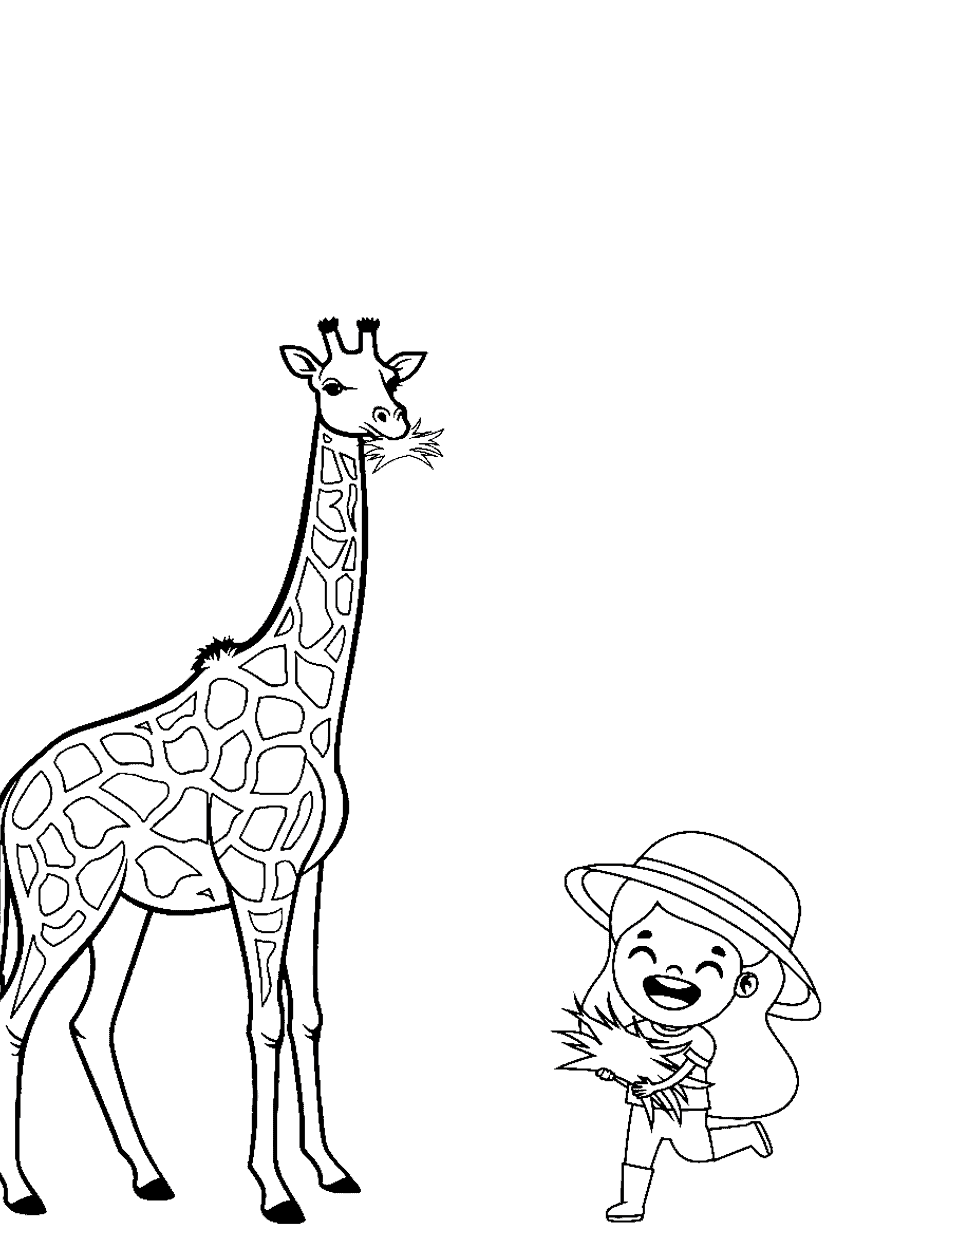 Kid and Giraffe Coloring Page - Happy kid feeding a giraffe.